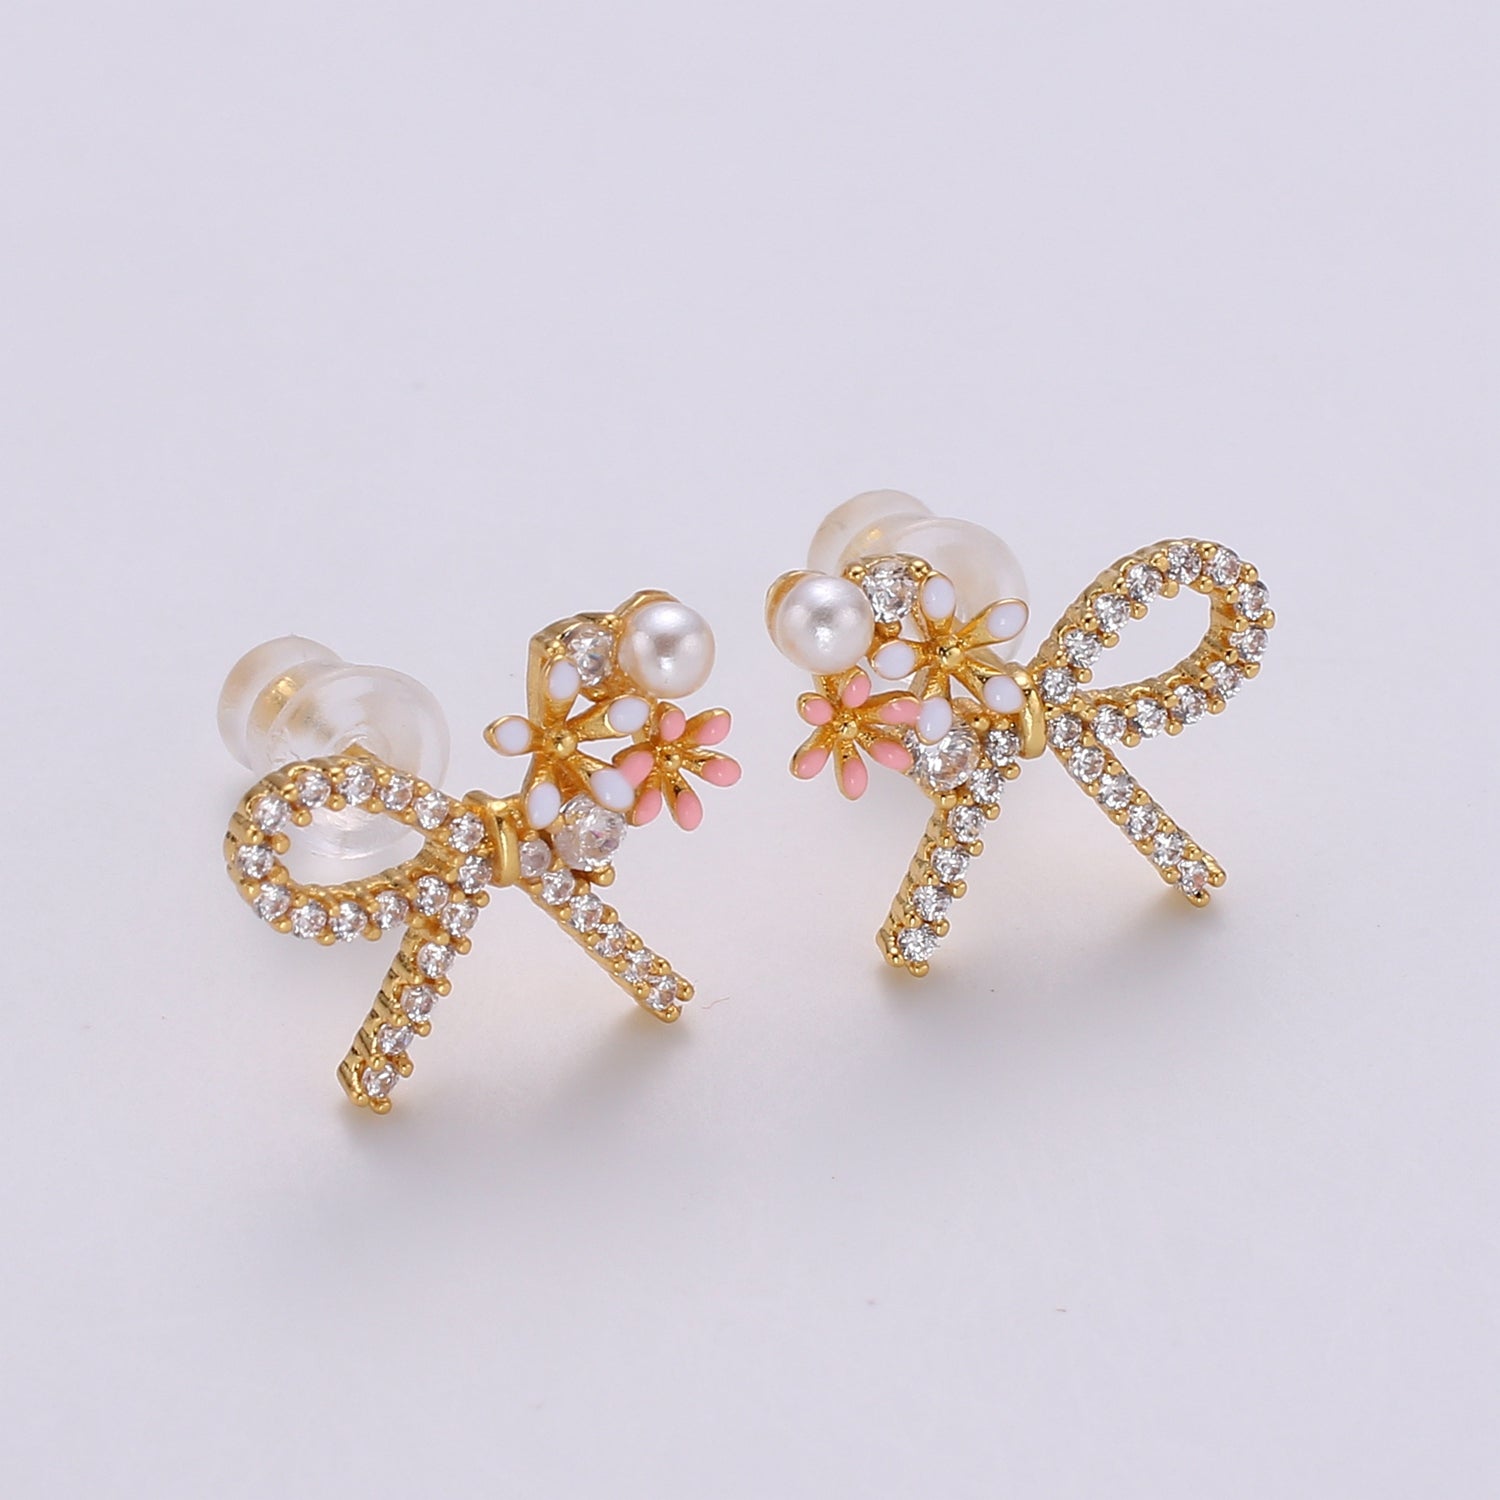 1x Gold Bow Earrings- 24k Gold Tiny Dainty Small Bow White CZ Gem Minimalist Jewelry Studs for Women Q-384 , Q-385 - DLUXCA